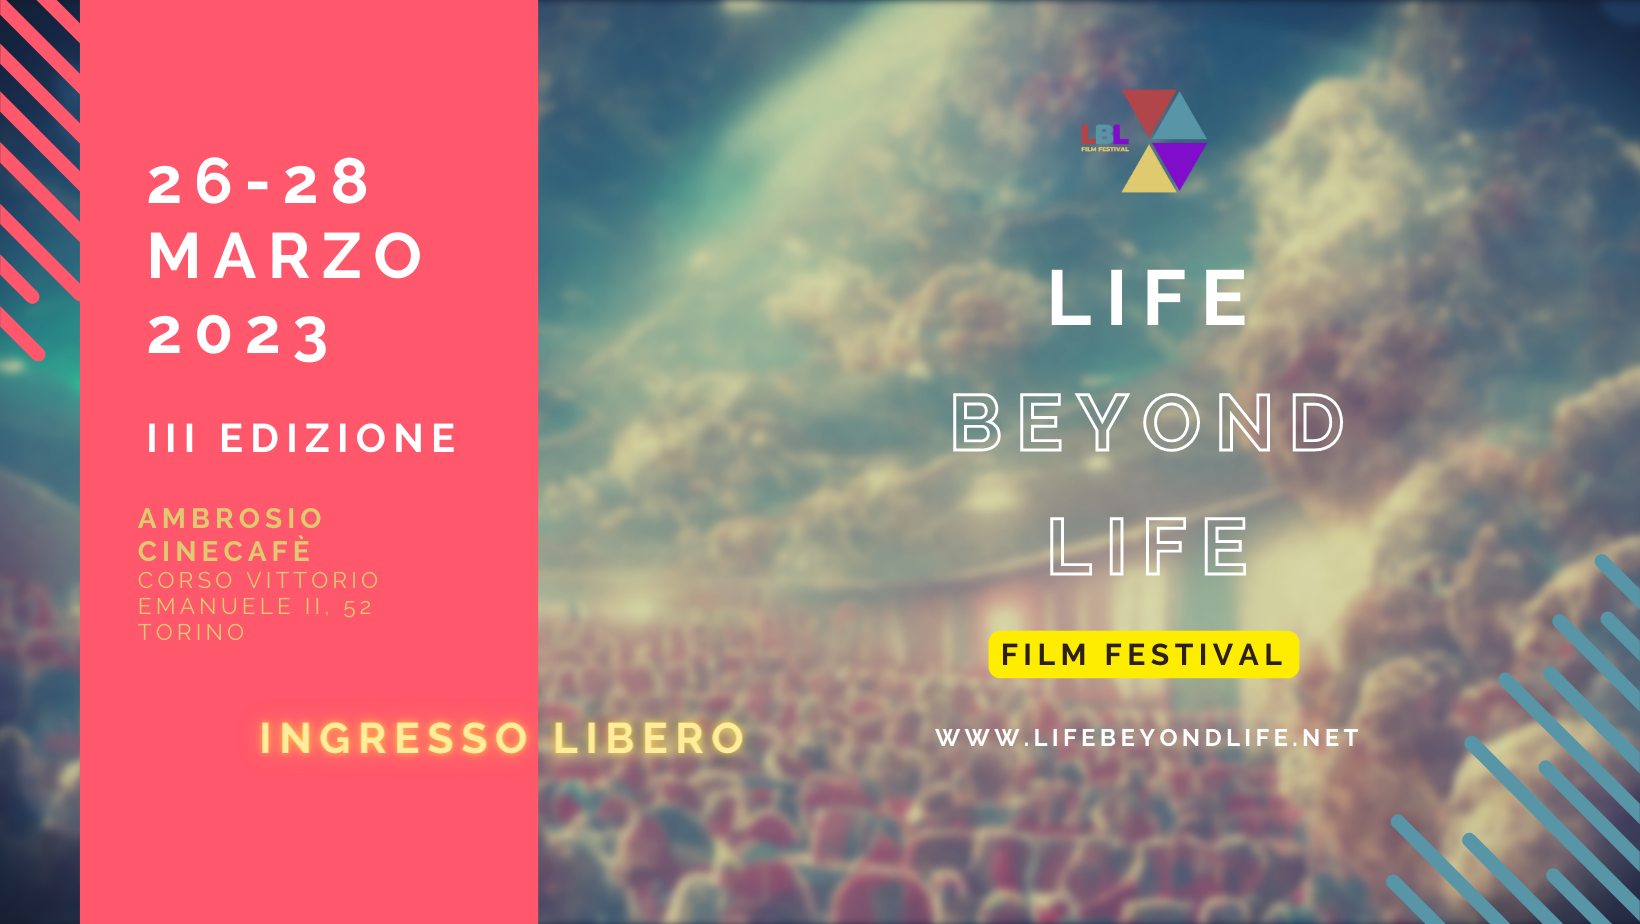 39 film per il terzo Life Beyond Life Film Festival